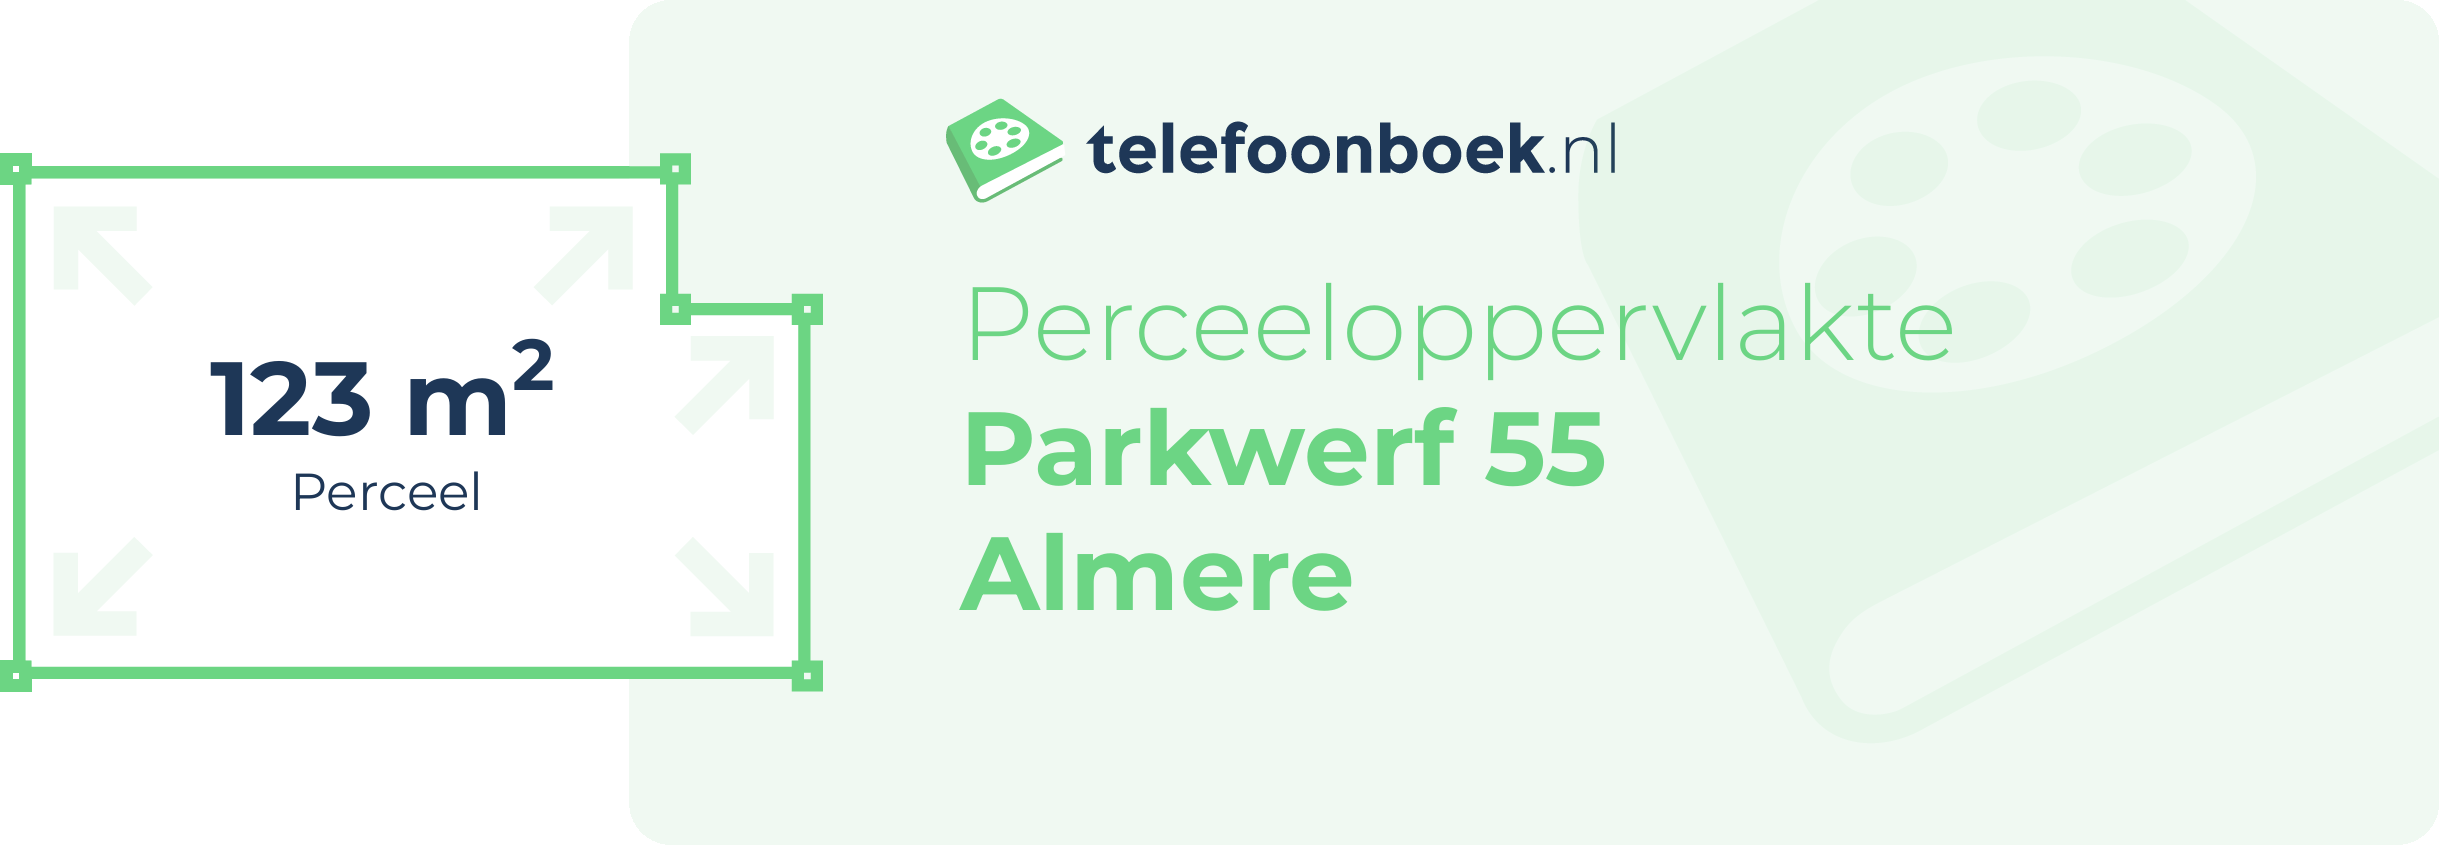 Perceeloppervlakte Parkwerf 55 Almere